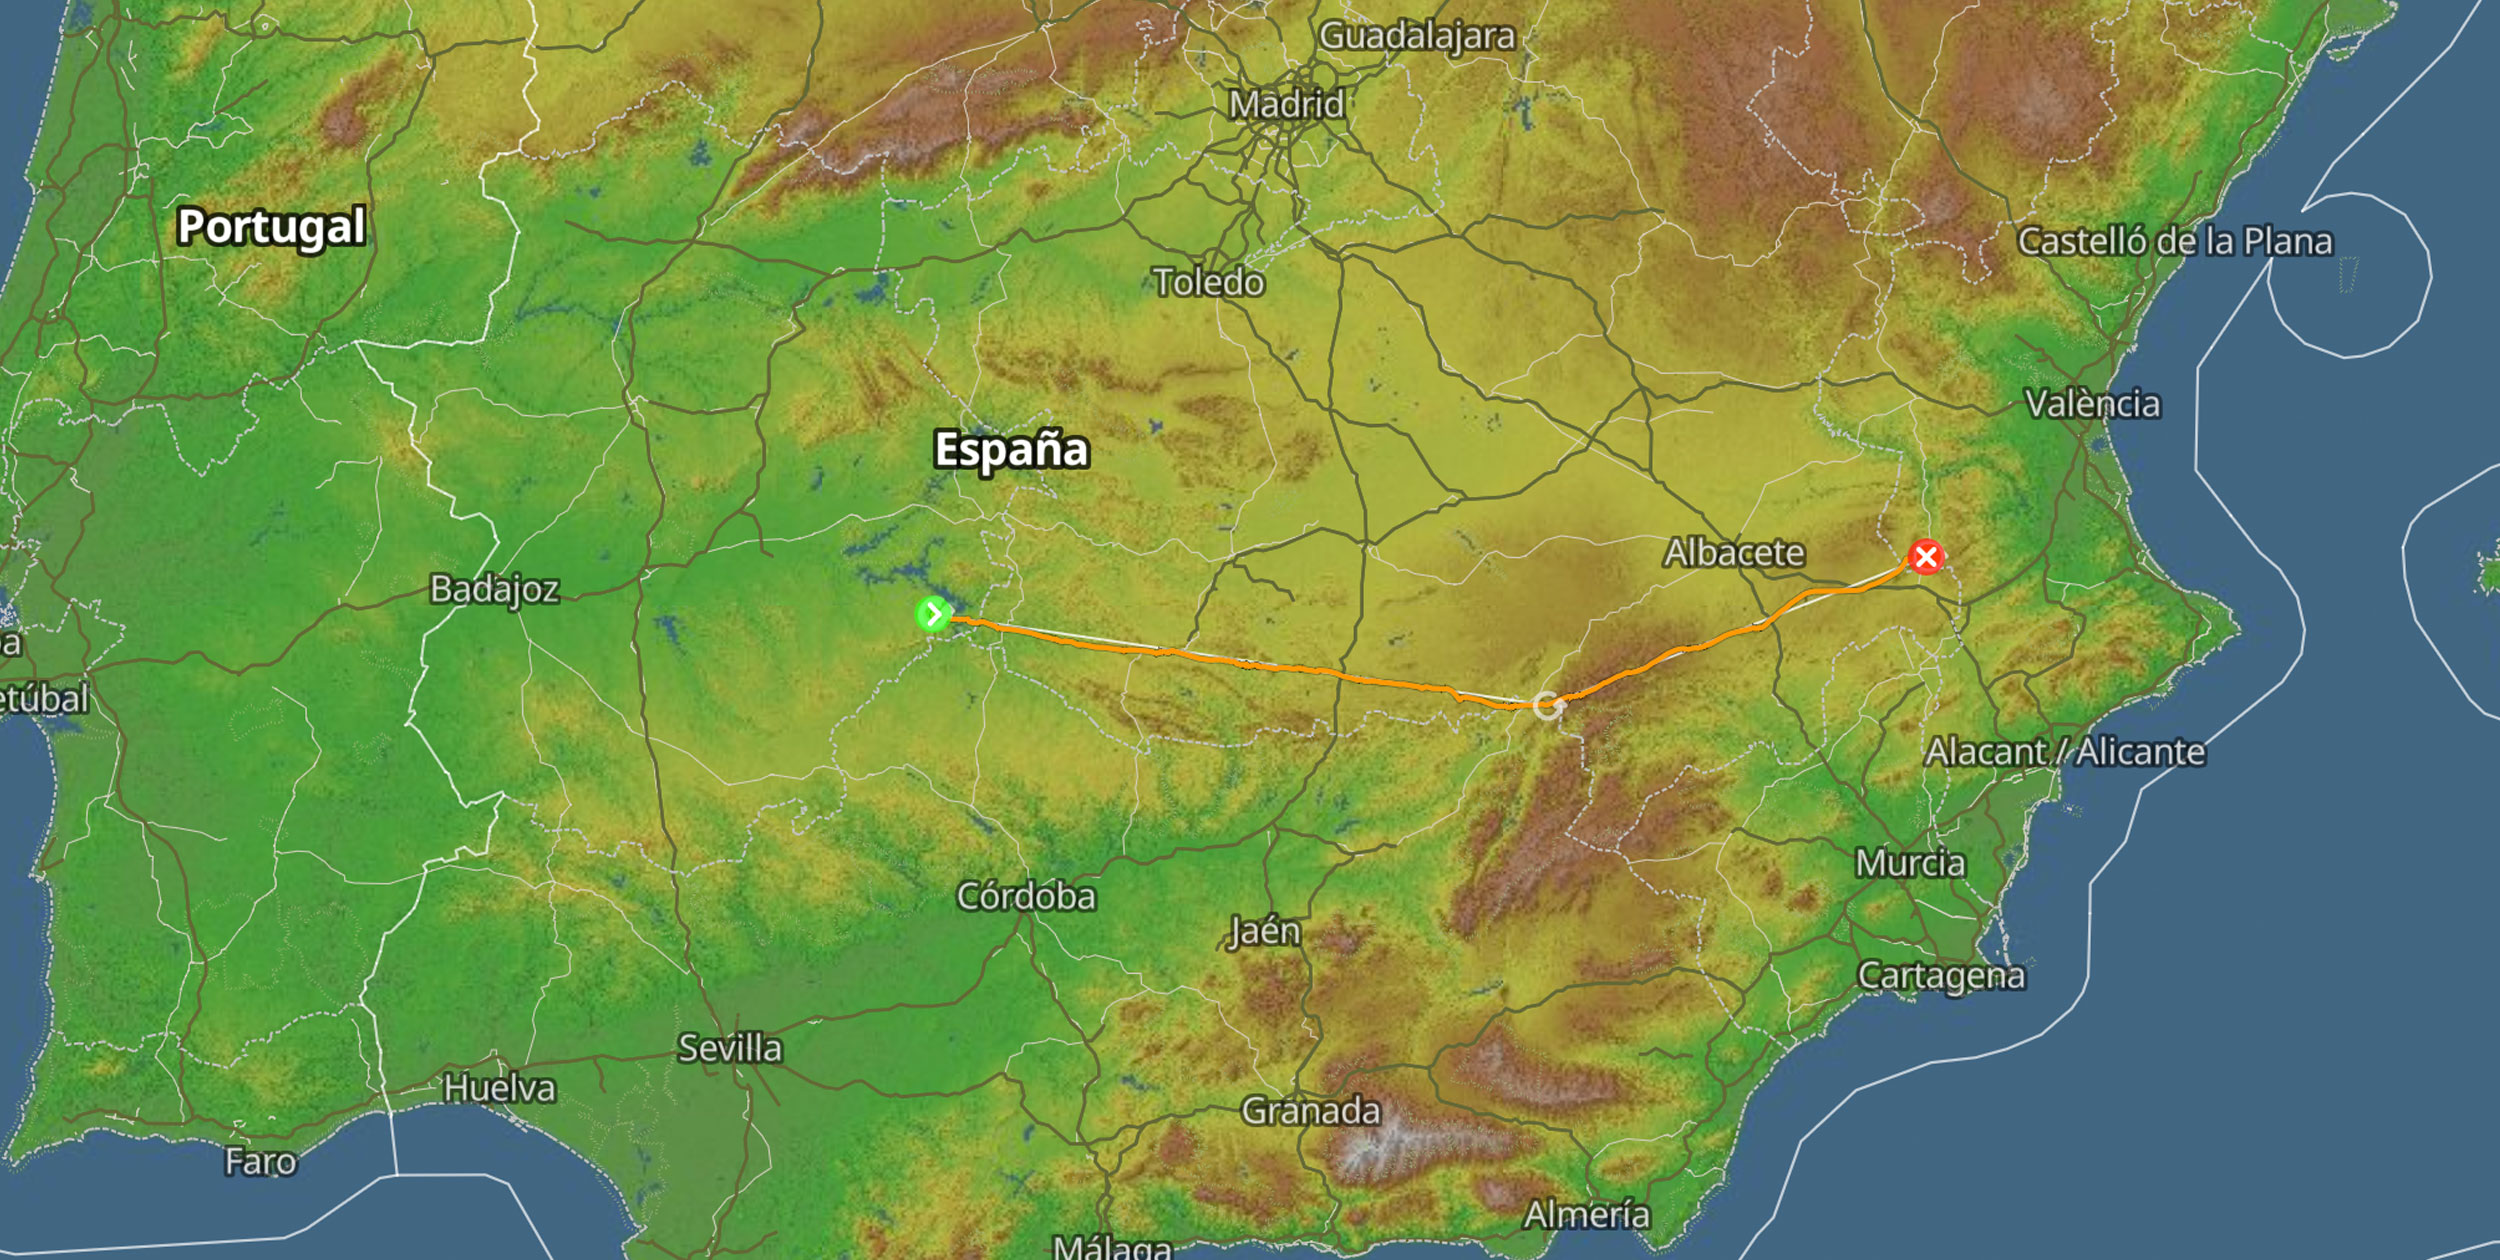 XContest screen shot of 329.9km European record flight